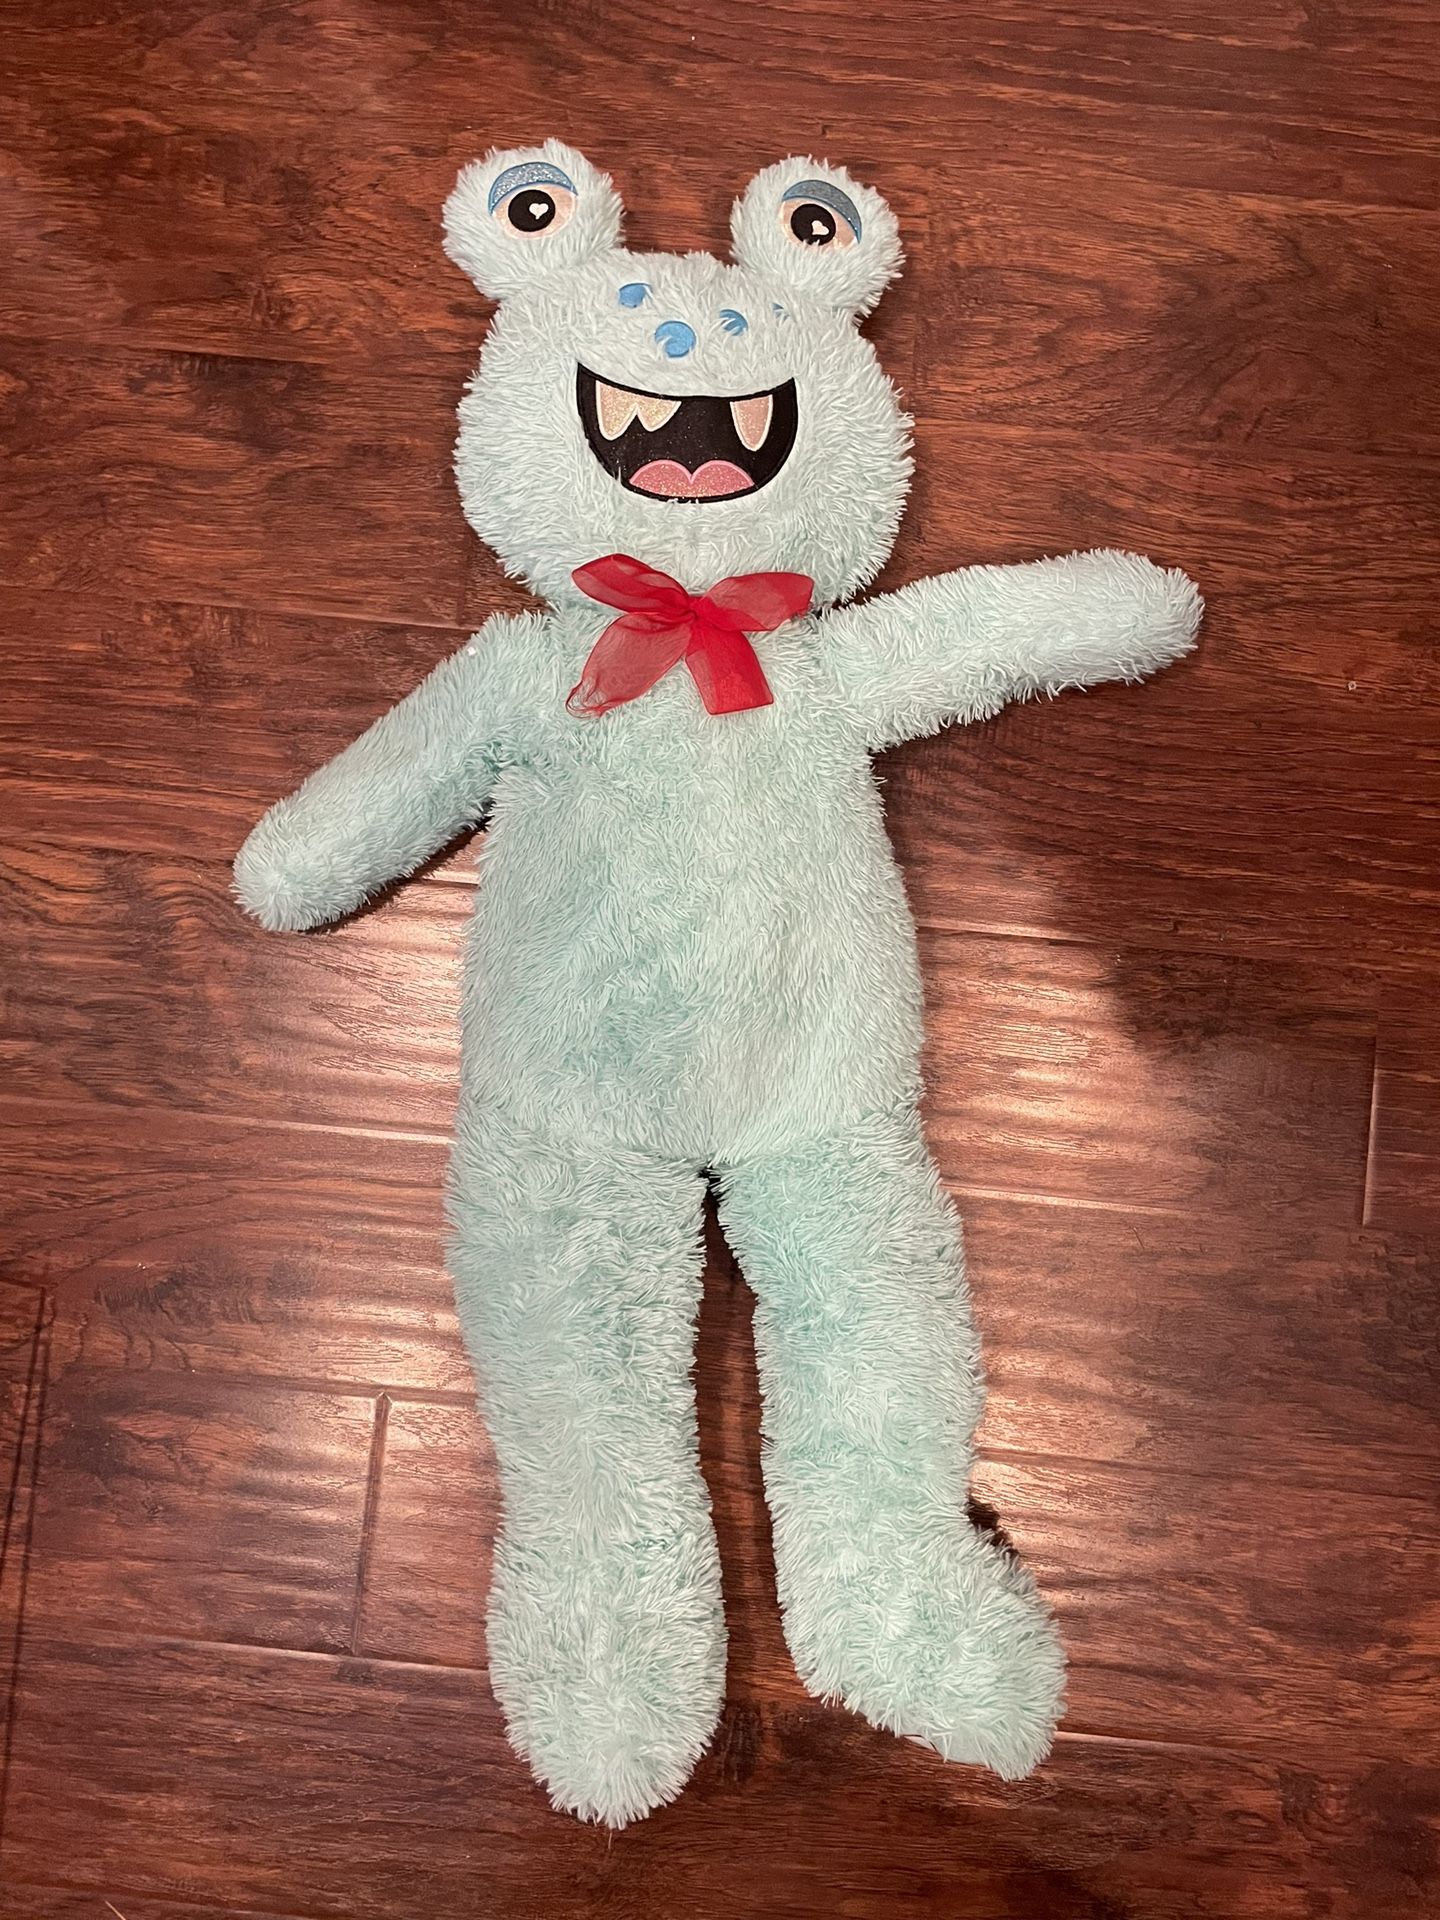 Valentines Day Blue Green Stuffed Animal Monster Teddy Bear 